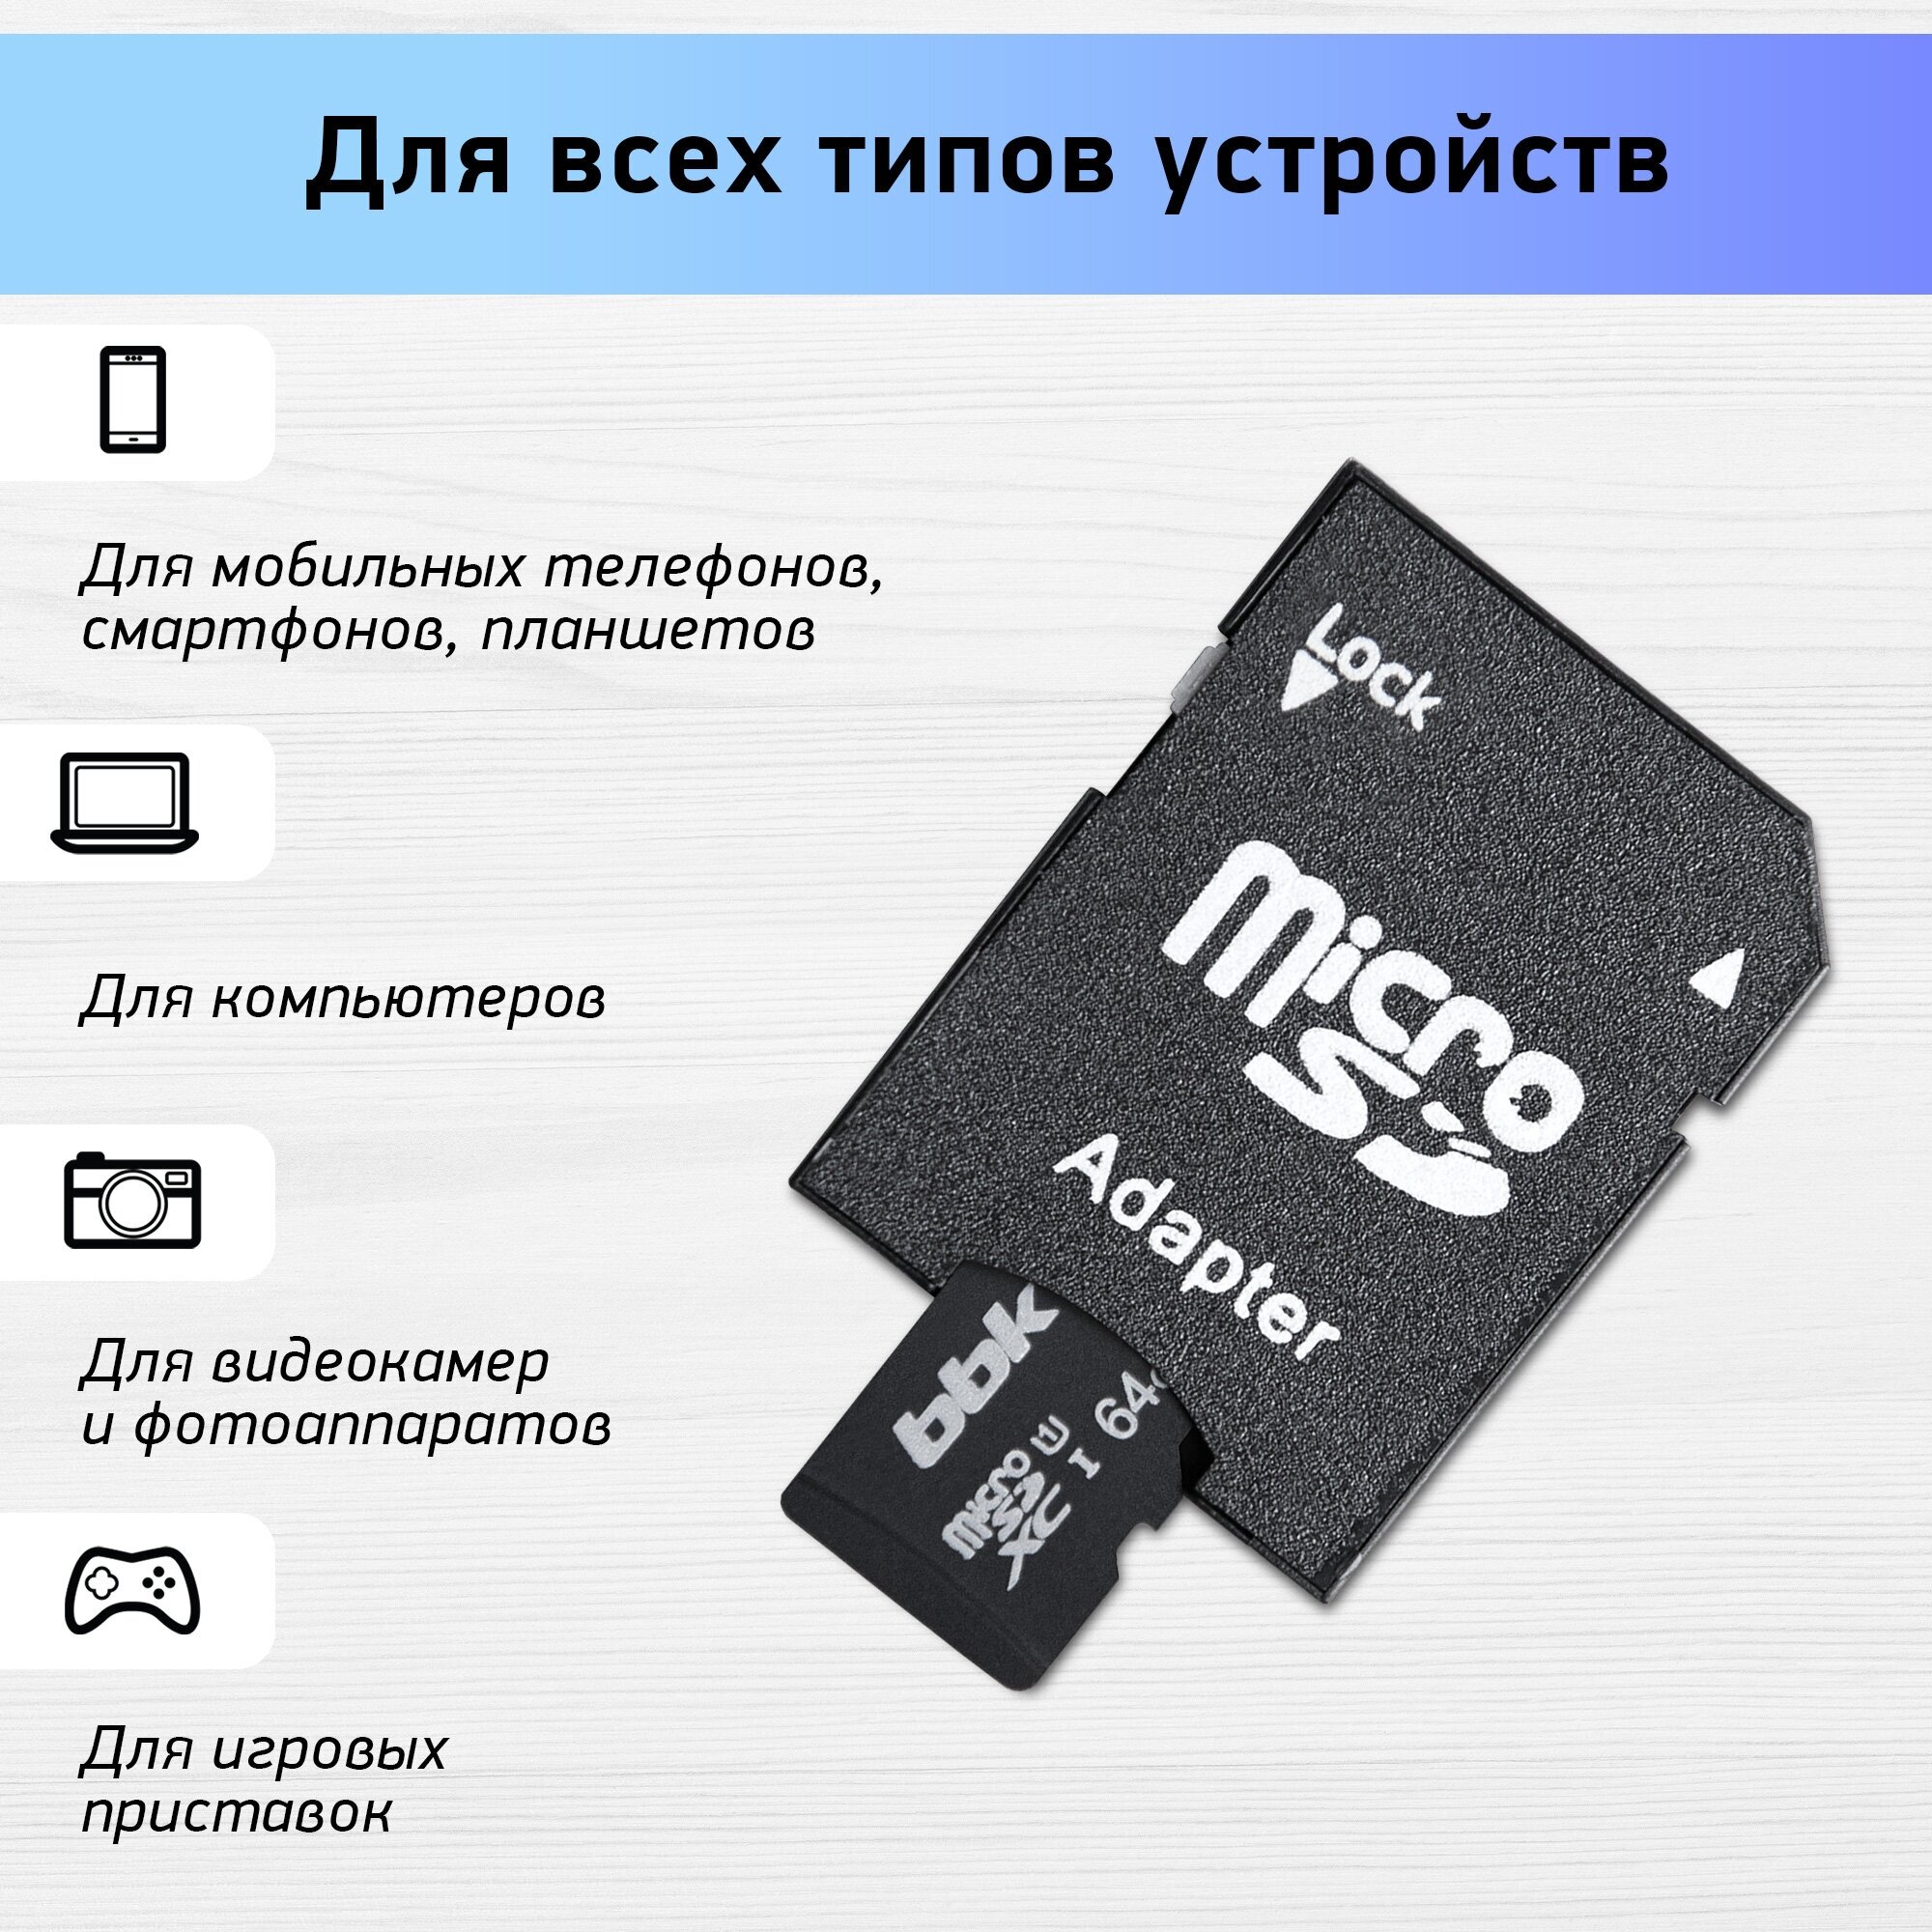 Микро SD карта BBK 064GXCU1C10A 64Гб микро SDXC UHS-1 класс 10 адаптер